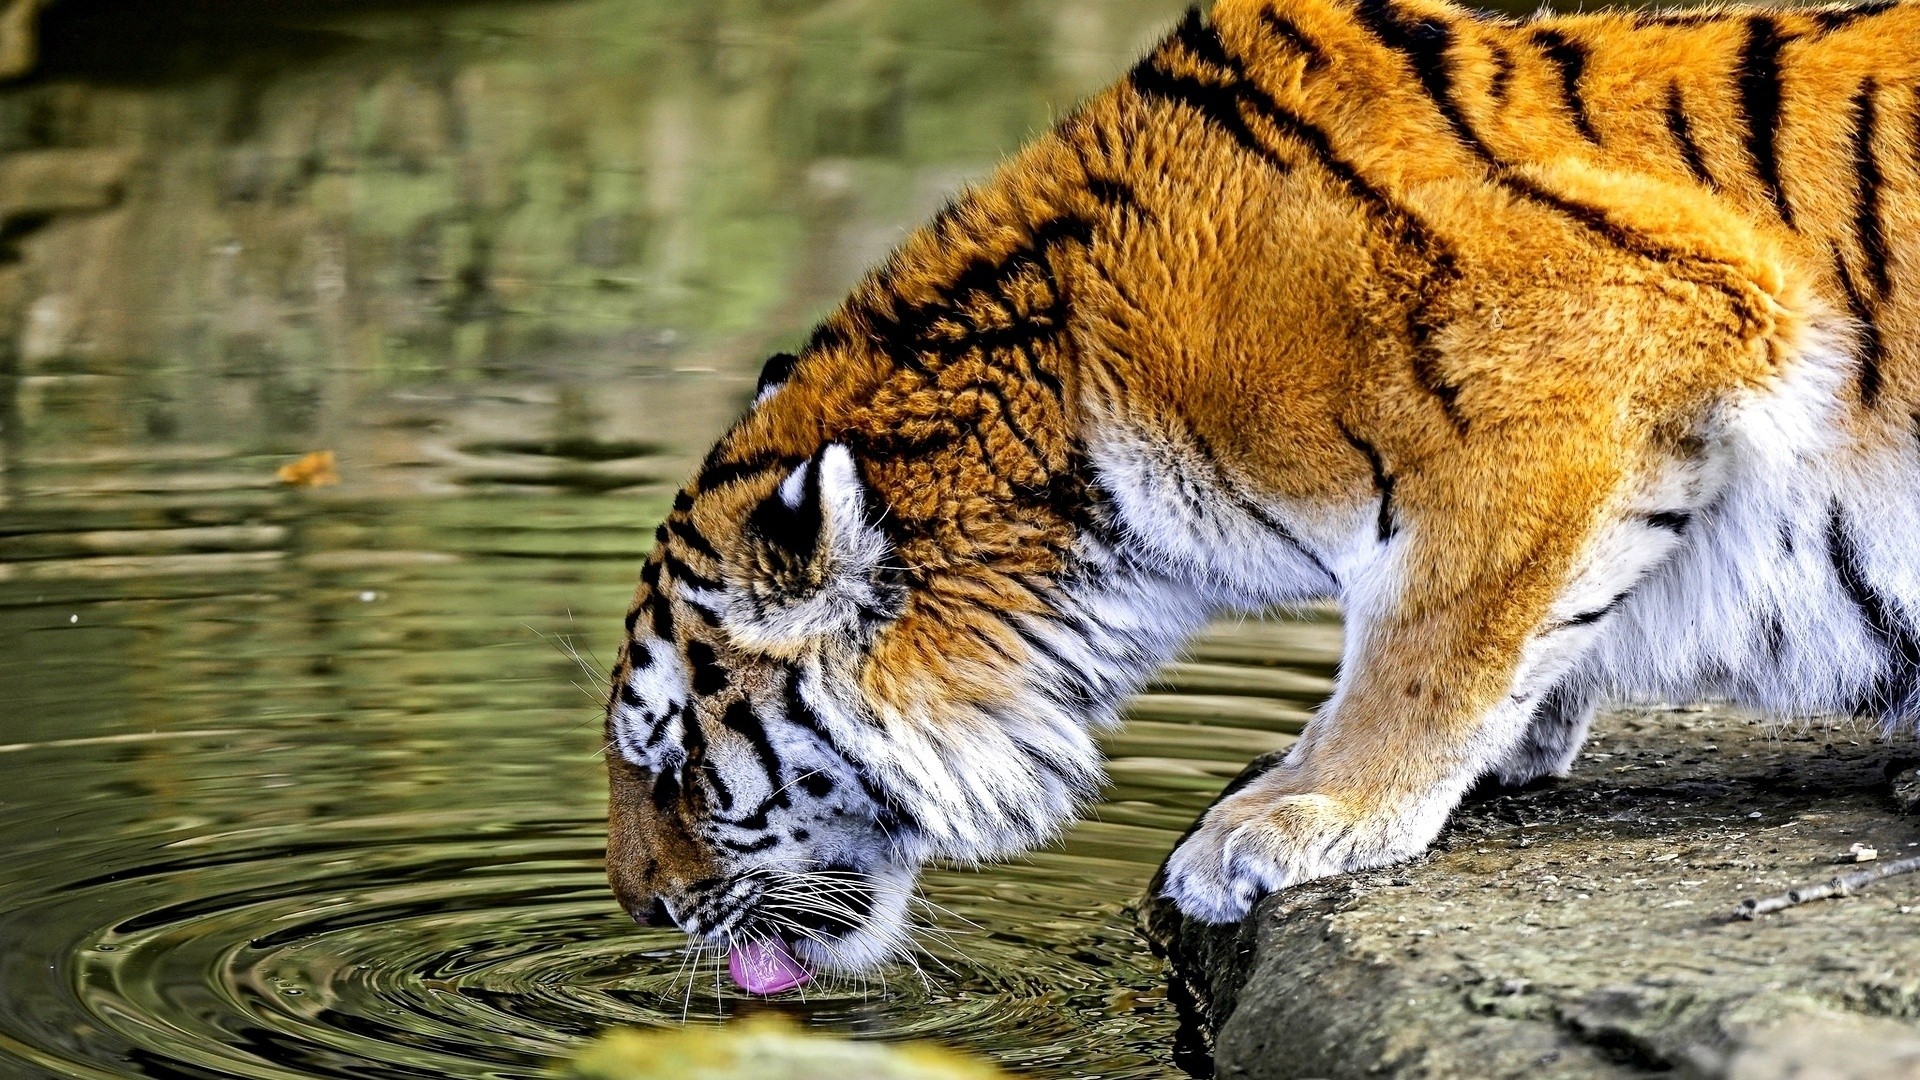 General 1920x1080 animals tiger HDR ripples mammals drinking big cats